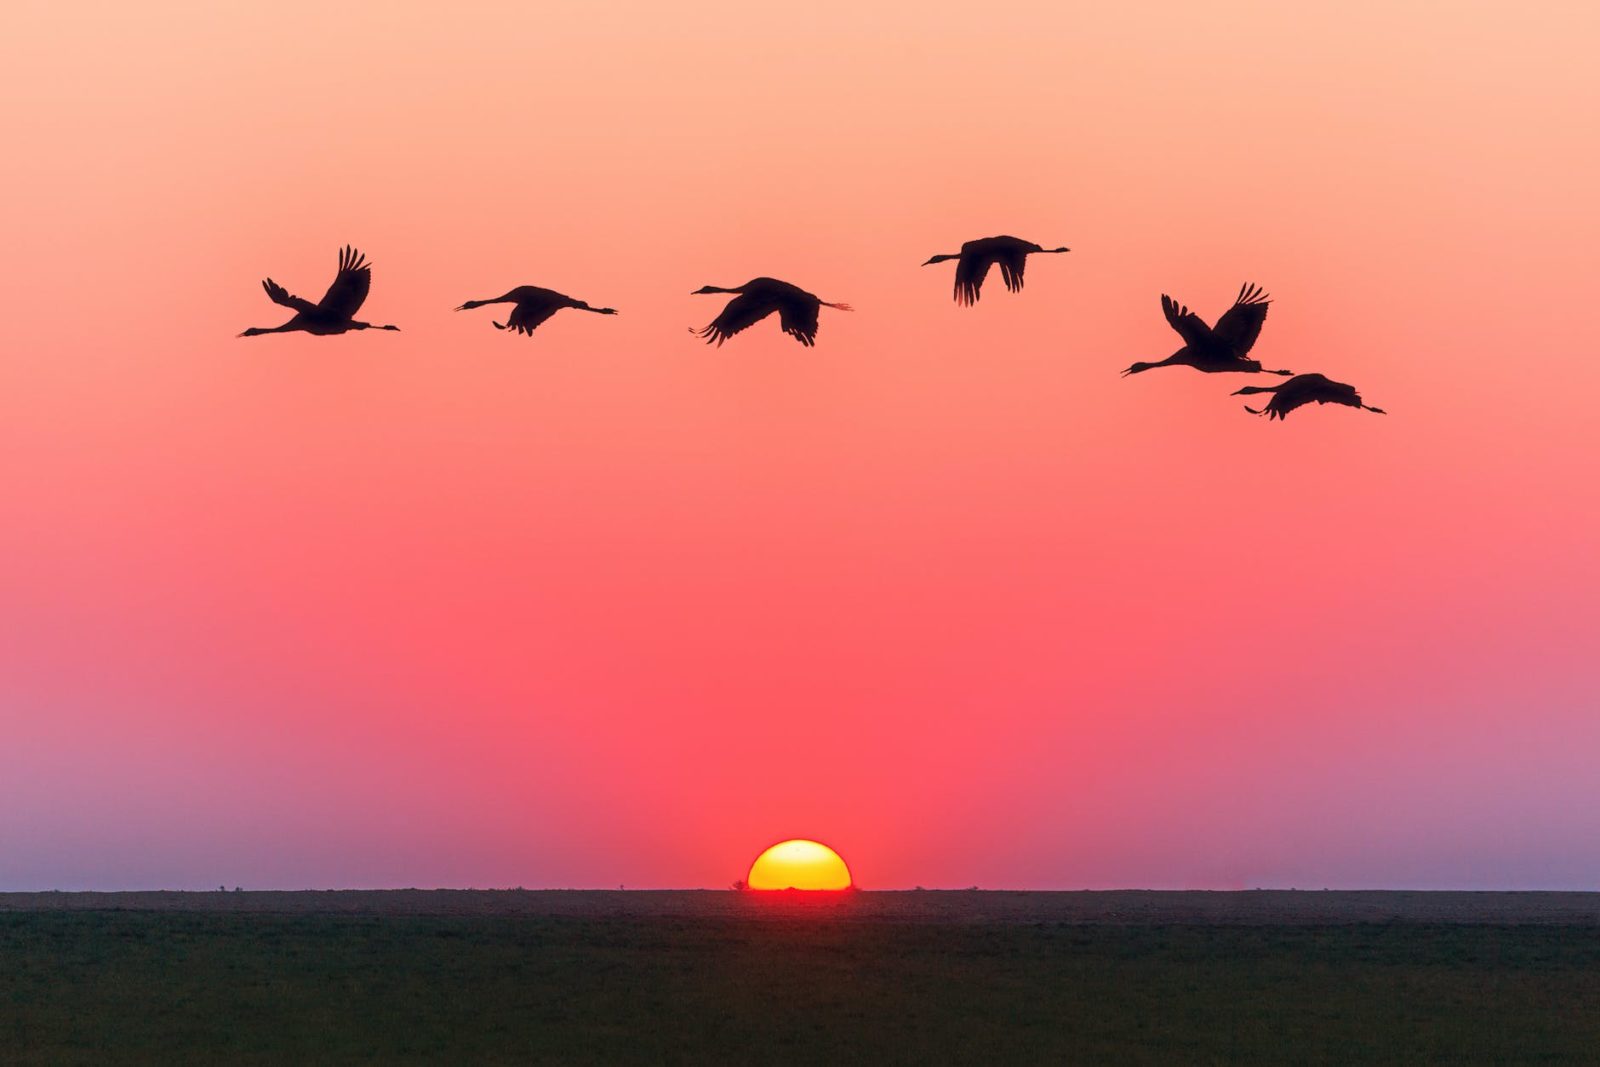 birds flying over body of water during golden hour